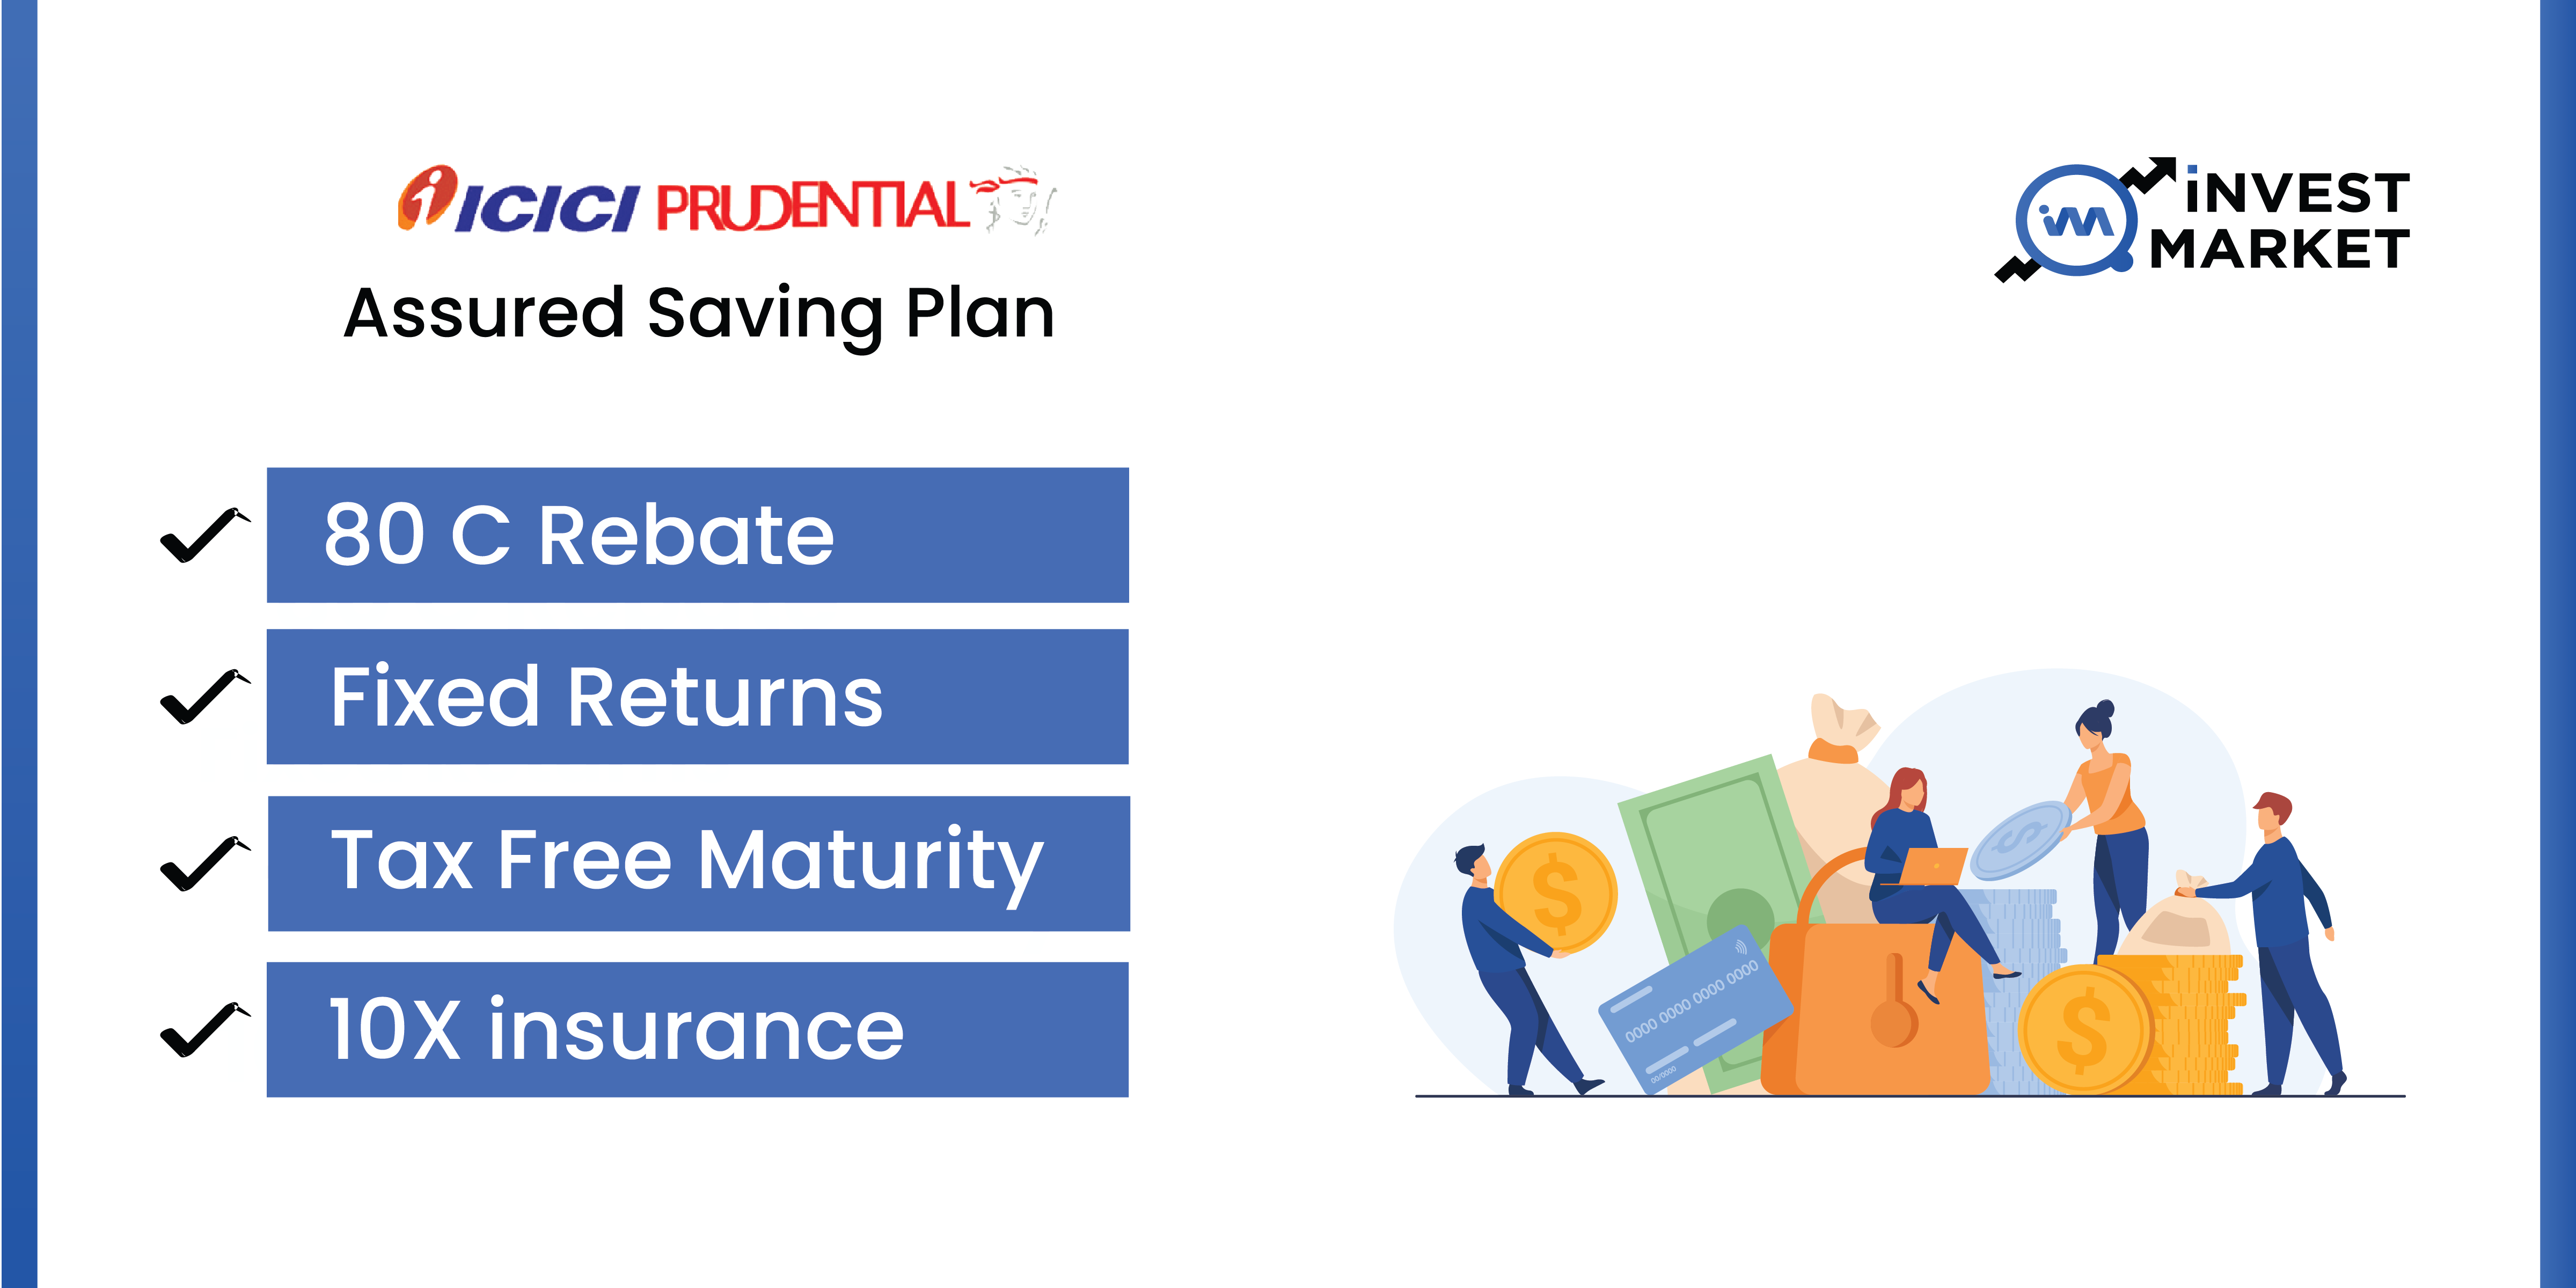 ICICI Pru Assured Savings Plan